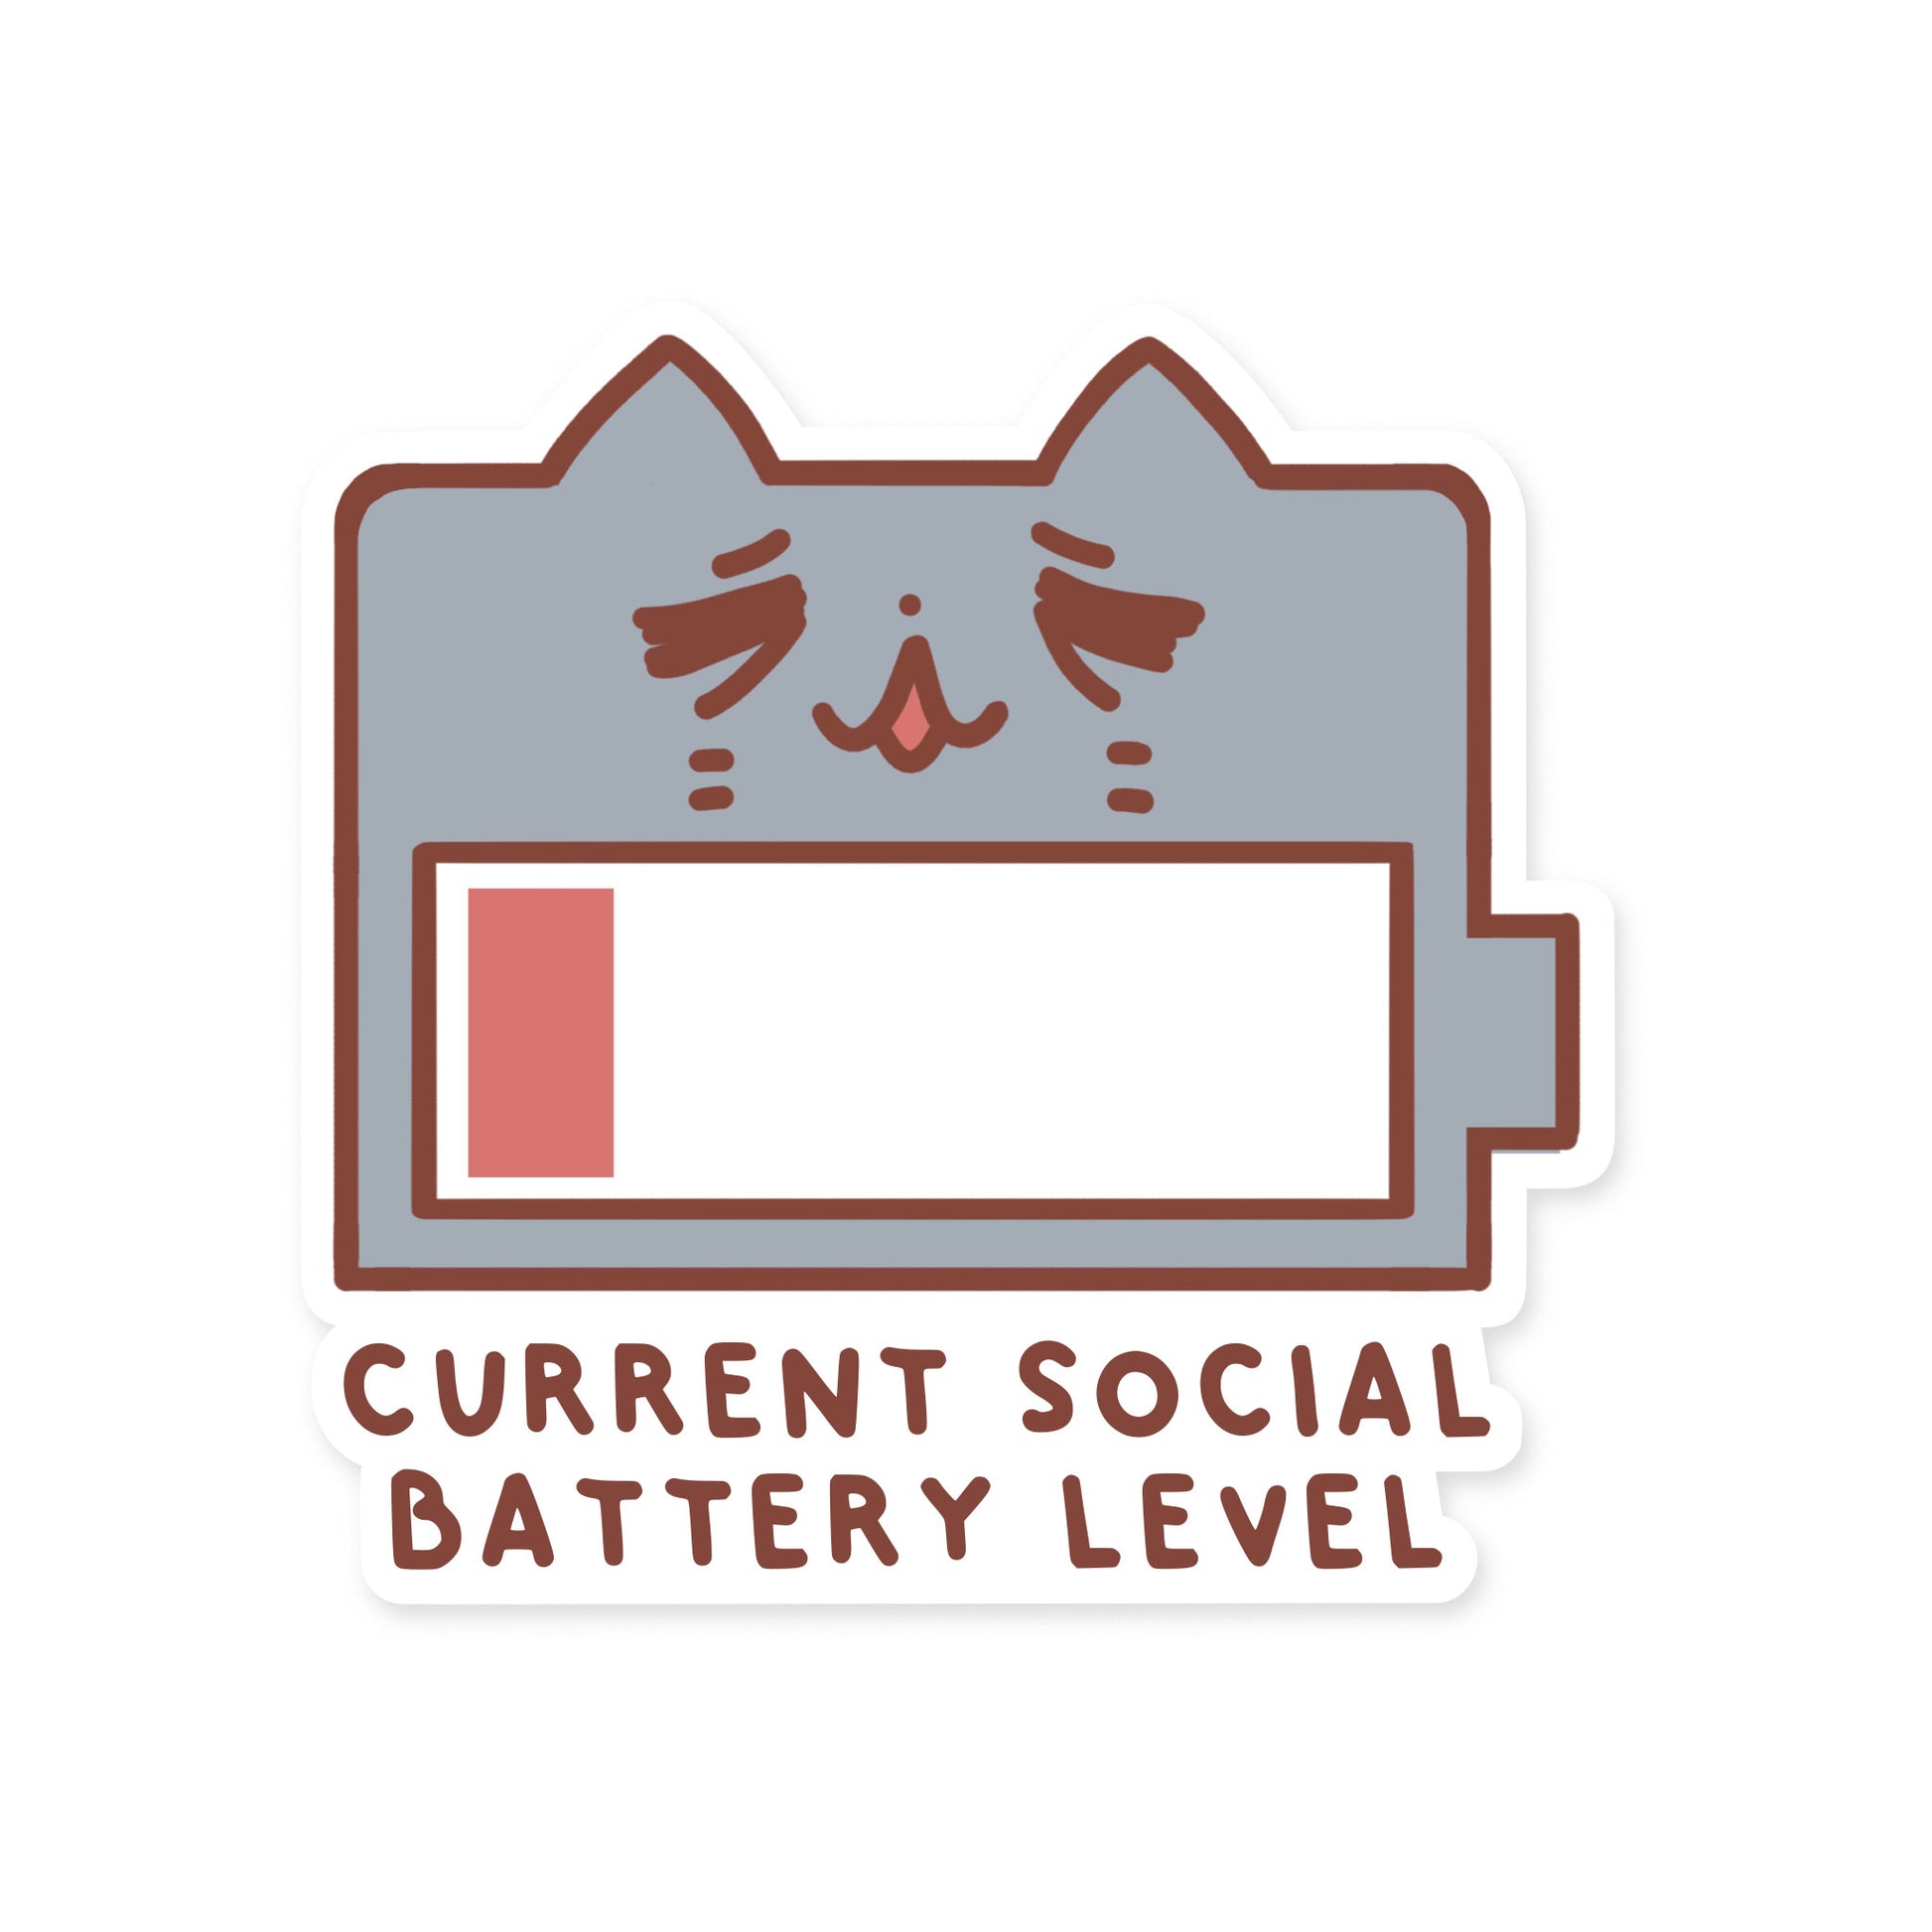 Social Battery Pin – TrendTact